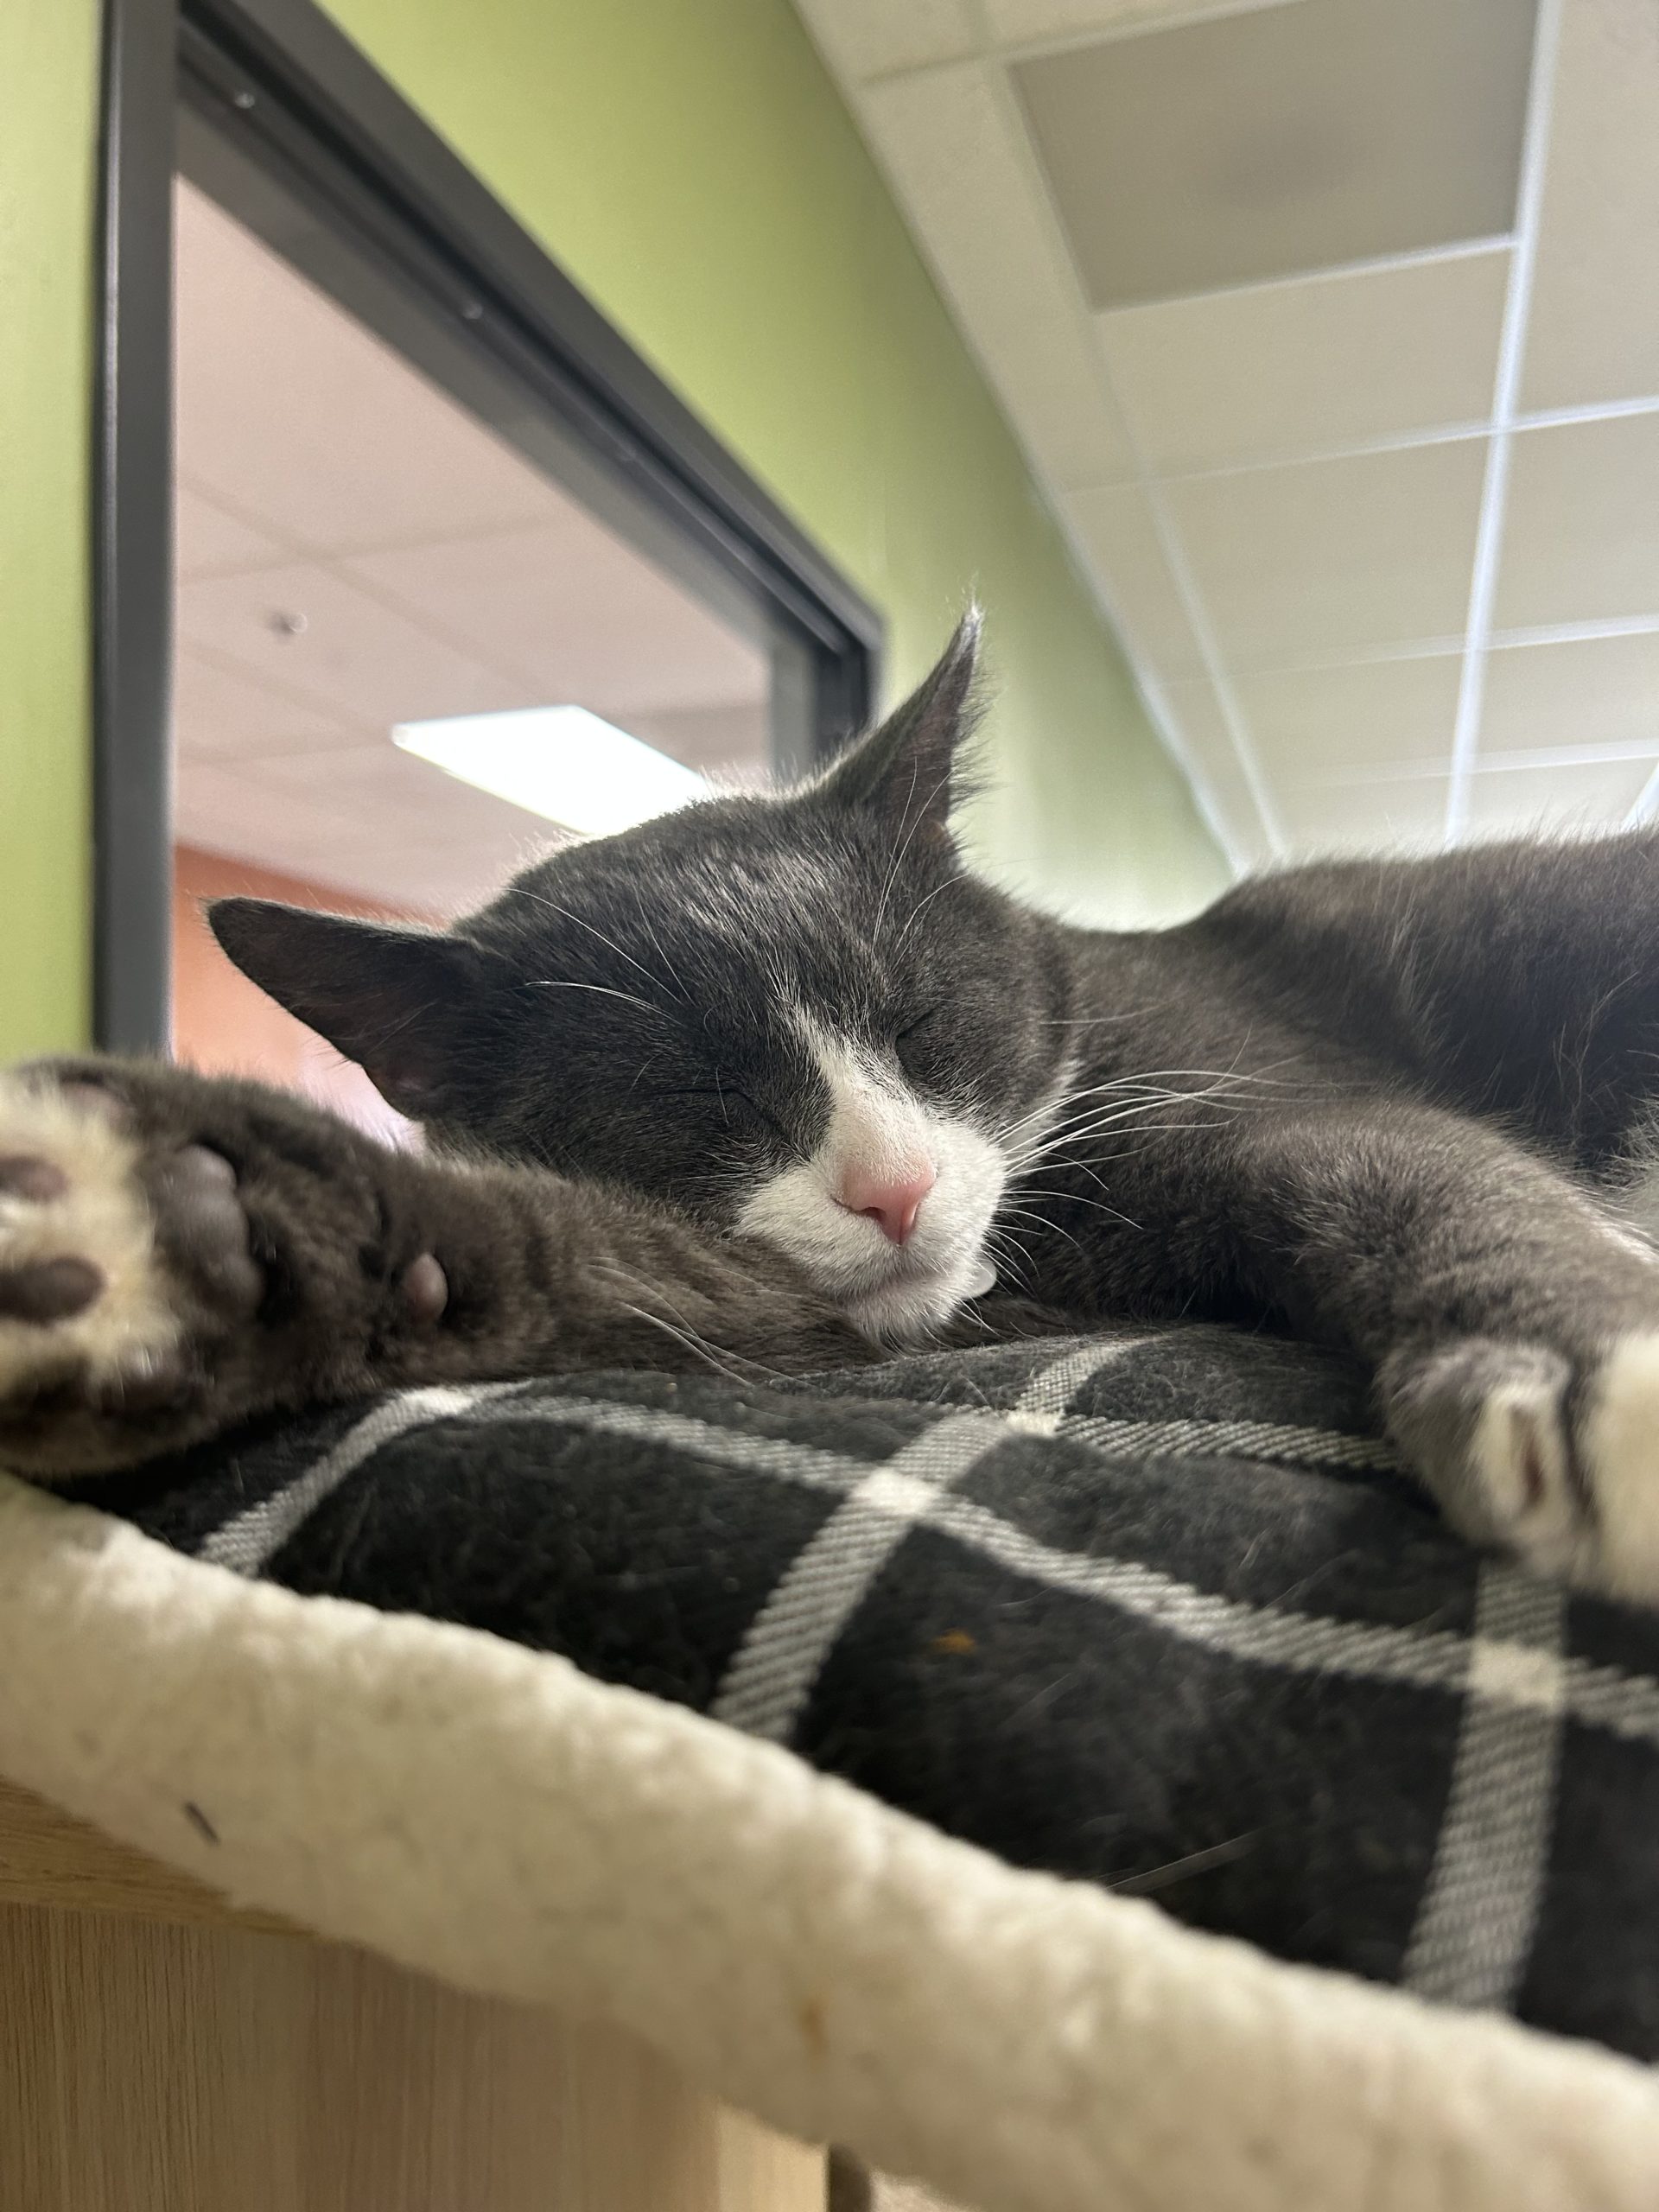 Bloomington cat café opens for business, pet fostering